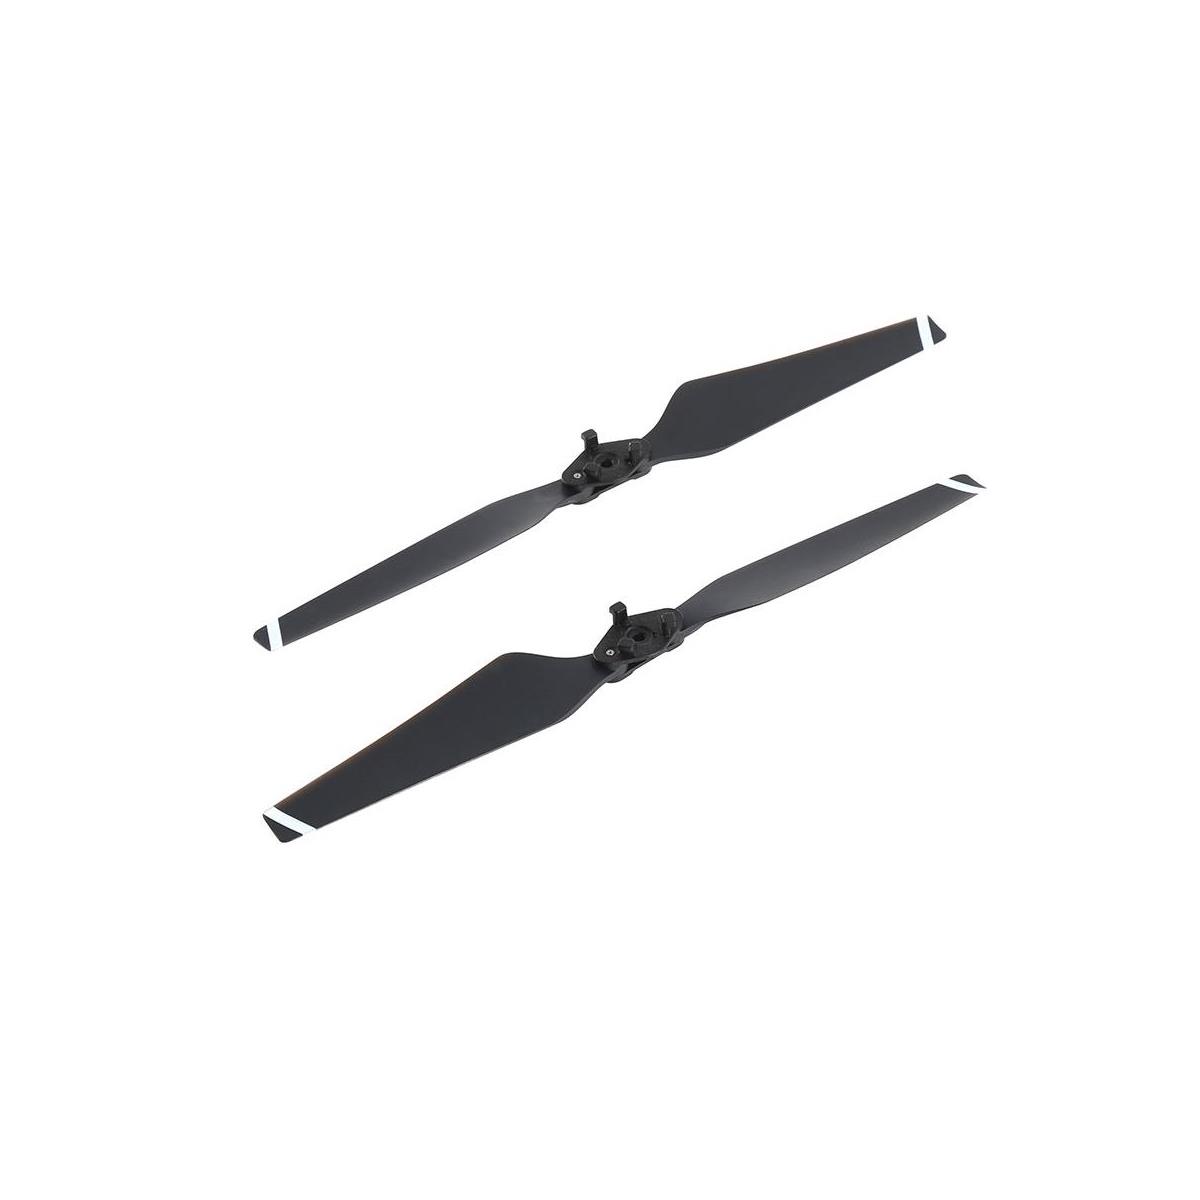 DJI Part 22 8330 Quick-release Folding Propeller for Mavic Quadcopter, 2 Pieces -  CP.PT.000578